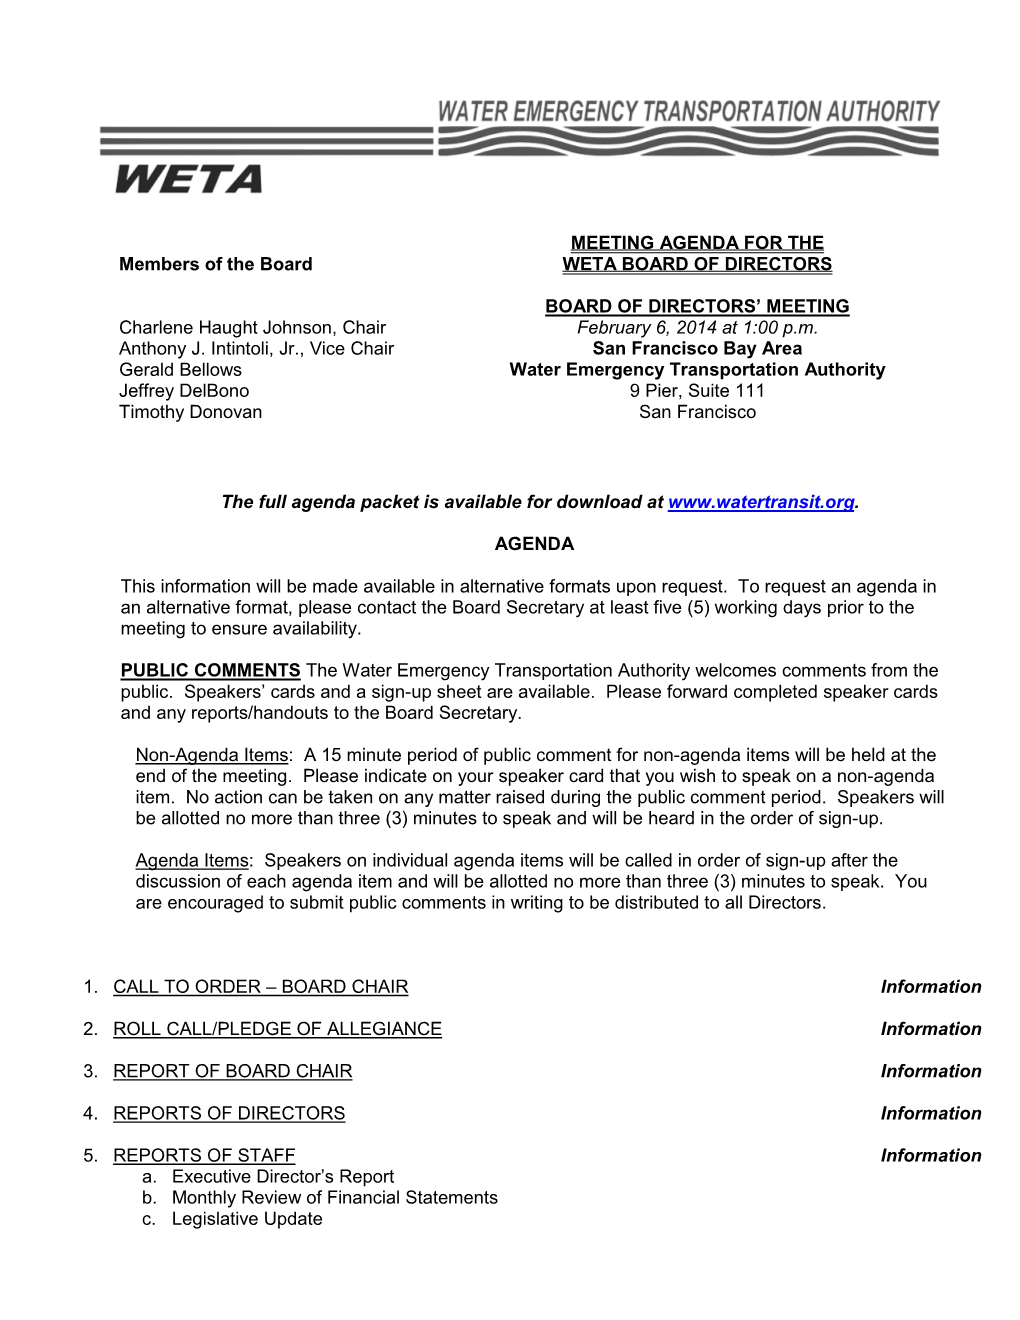 Meeting Agenda for the Weta Board of Directors Board